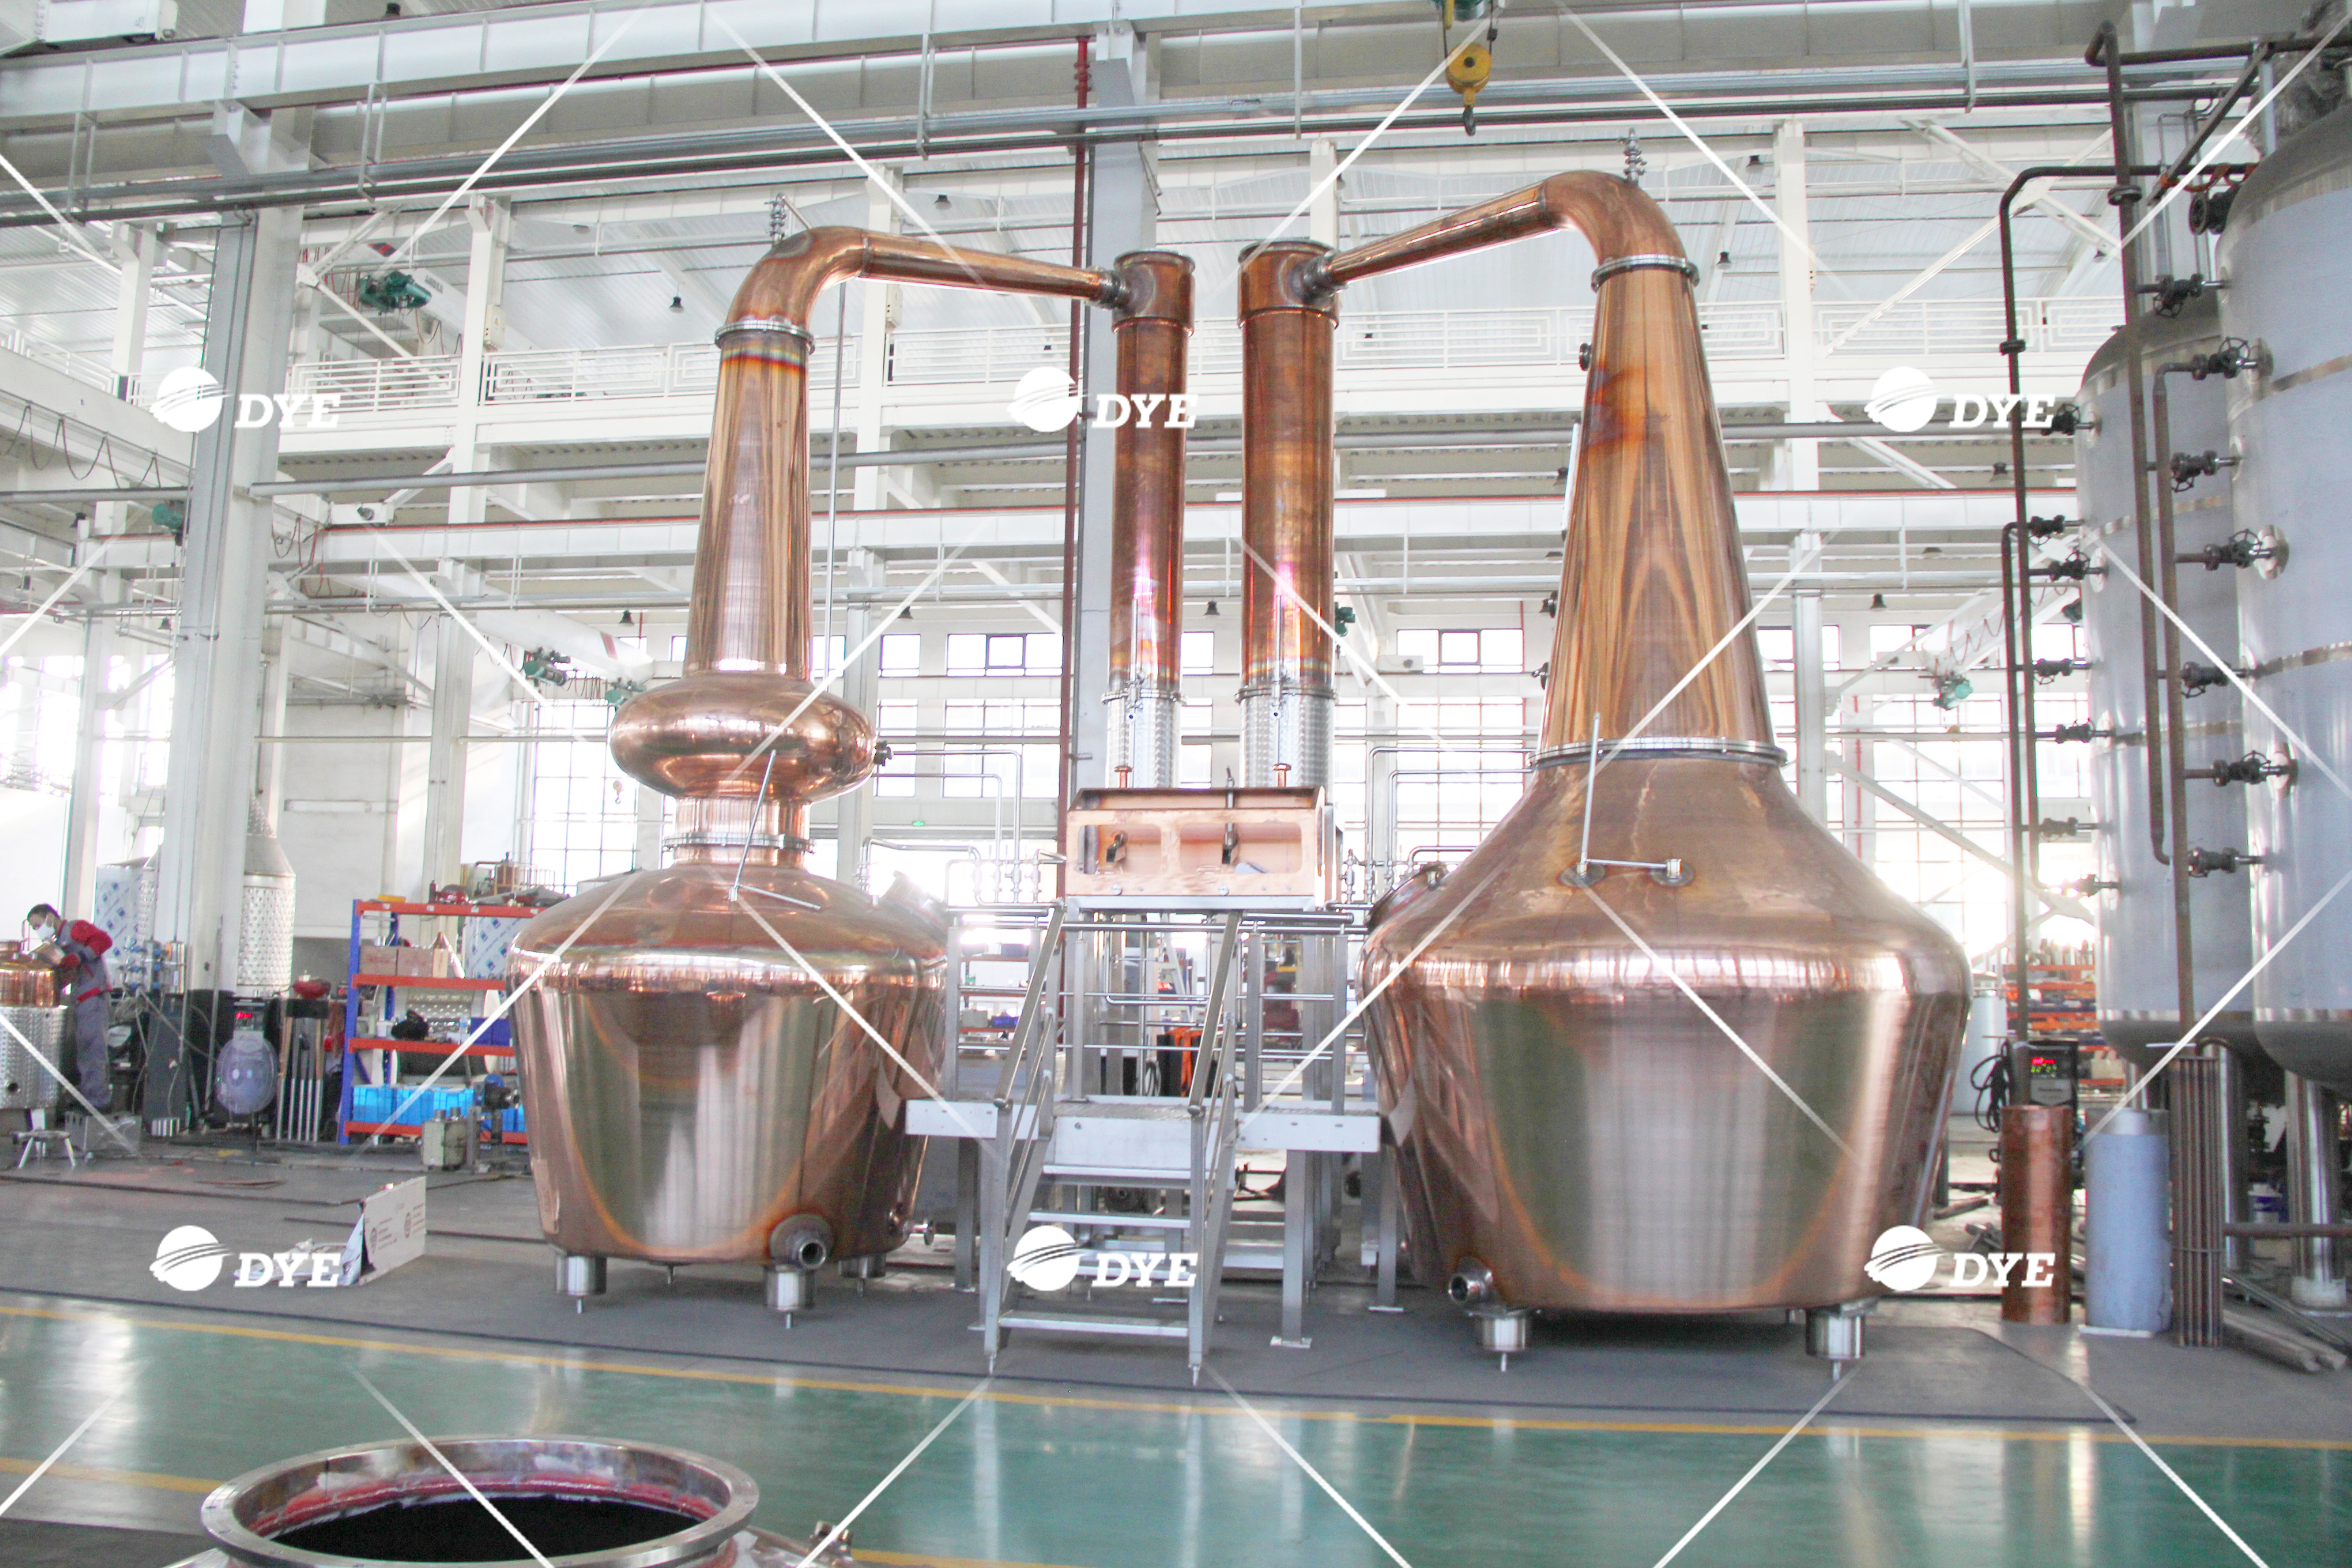 Double Pot Still Copper Distillery